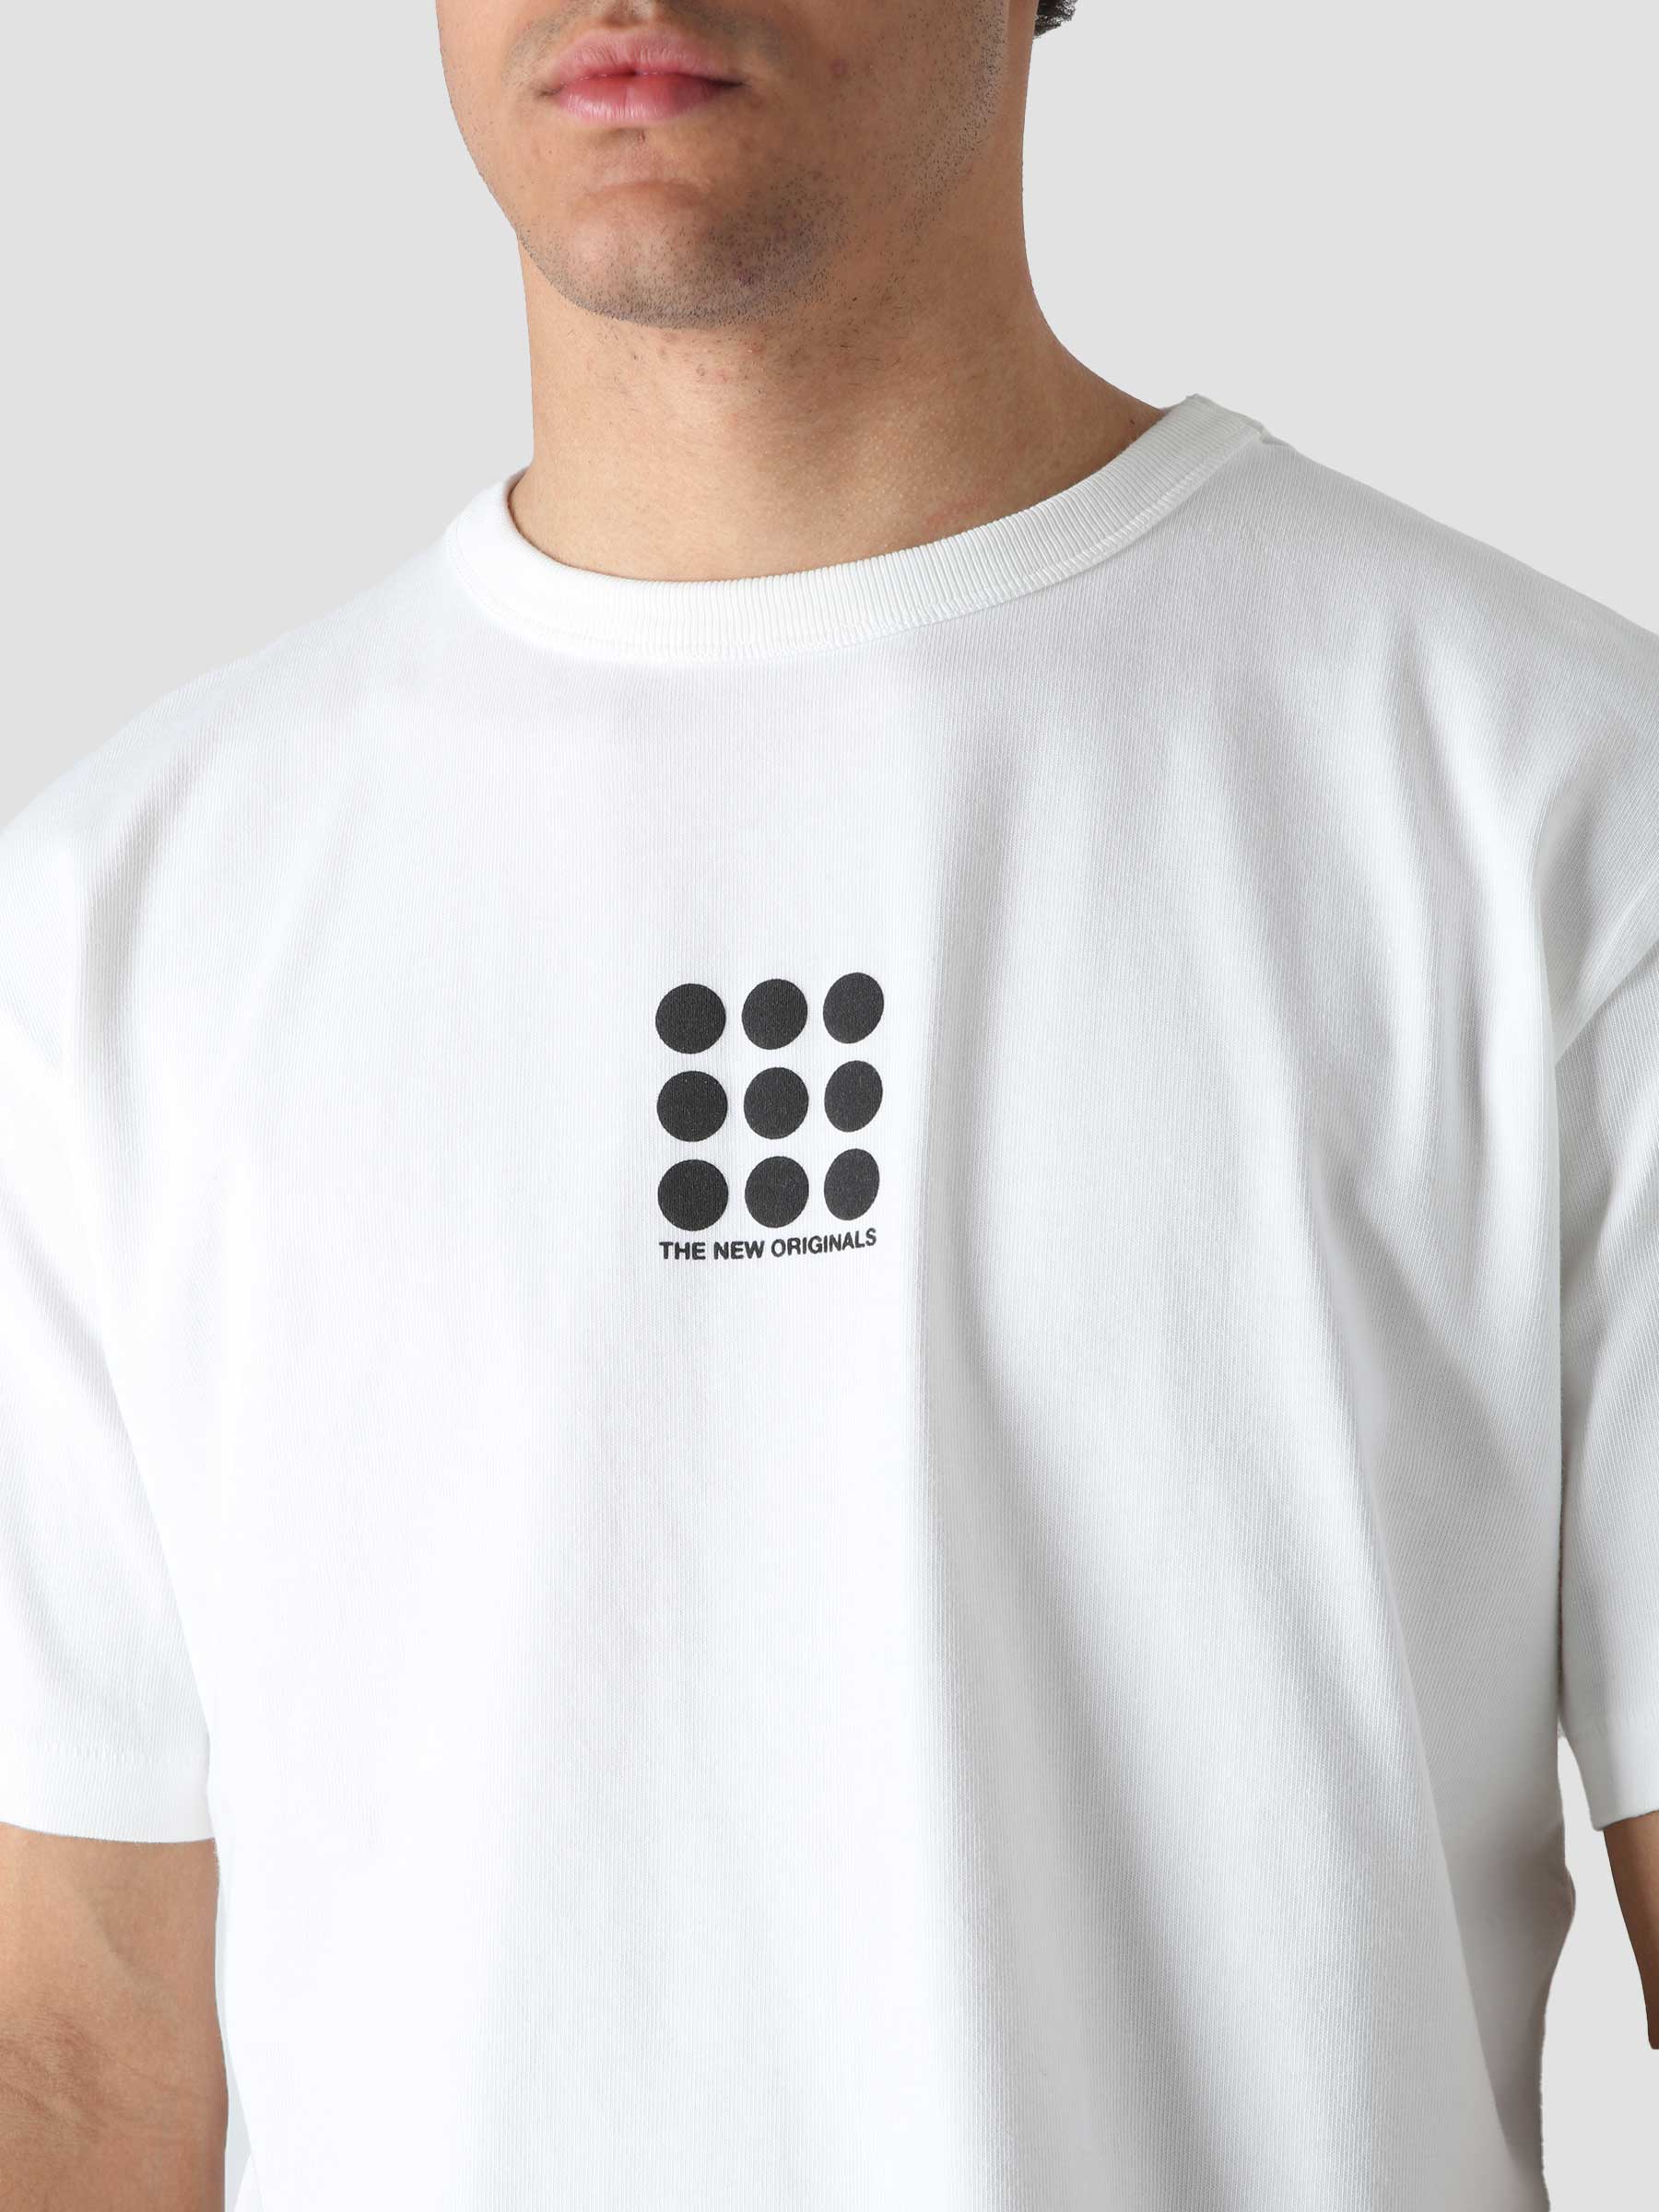 Freshcotton x Sneakerjagers The New Originals 9-Dots T-Shirt